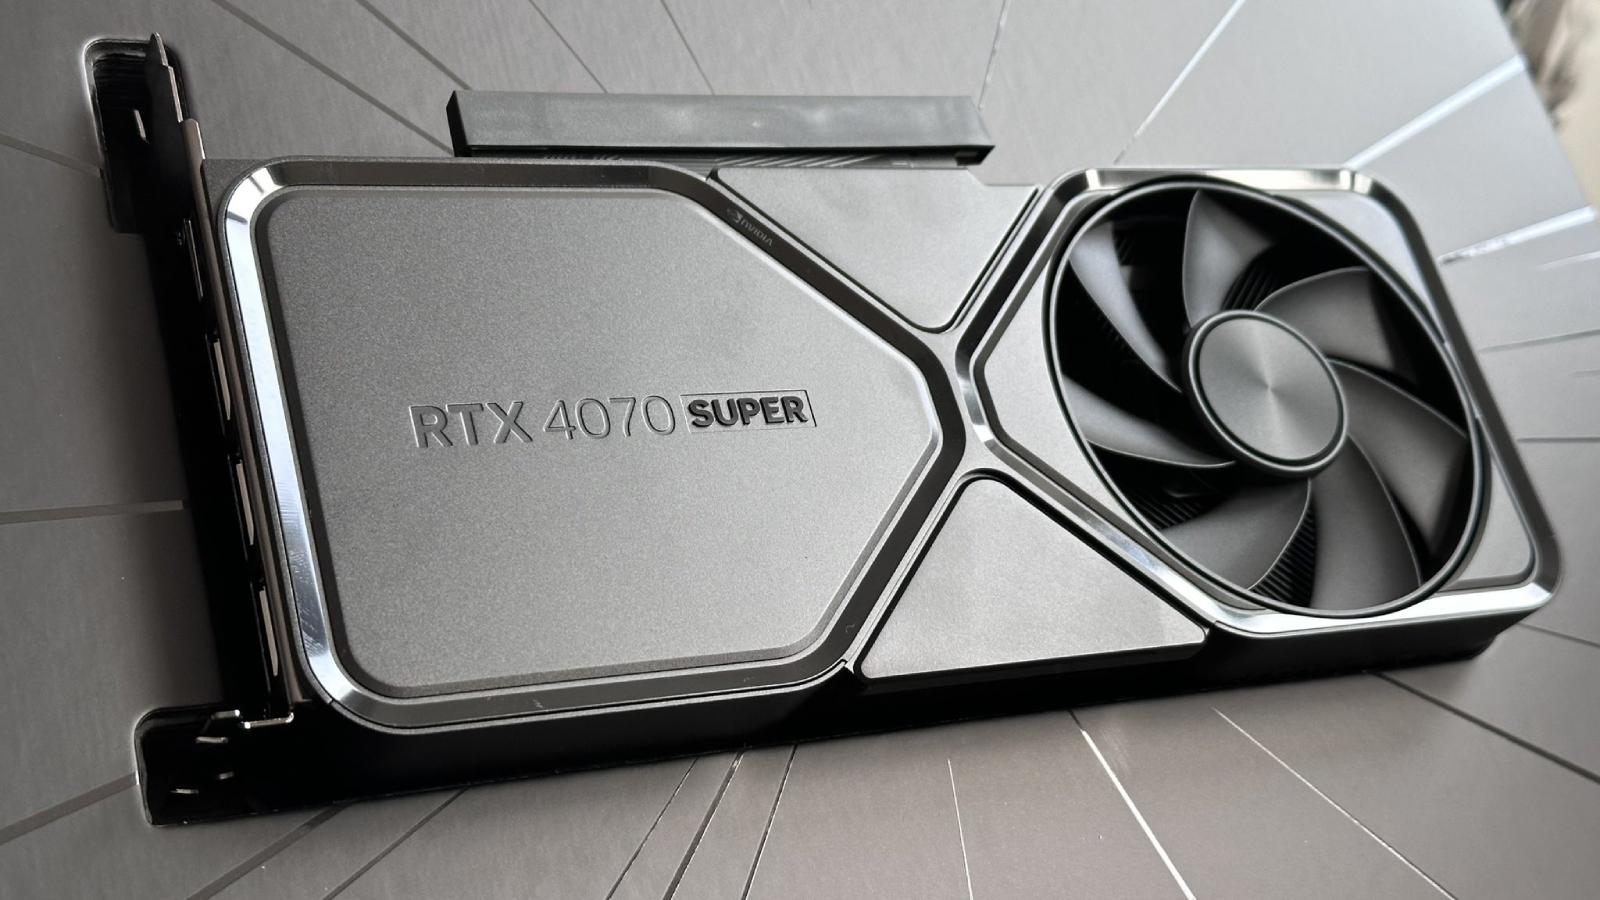 RTX 4070 Super in a box